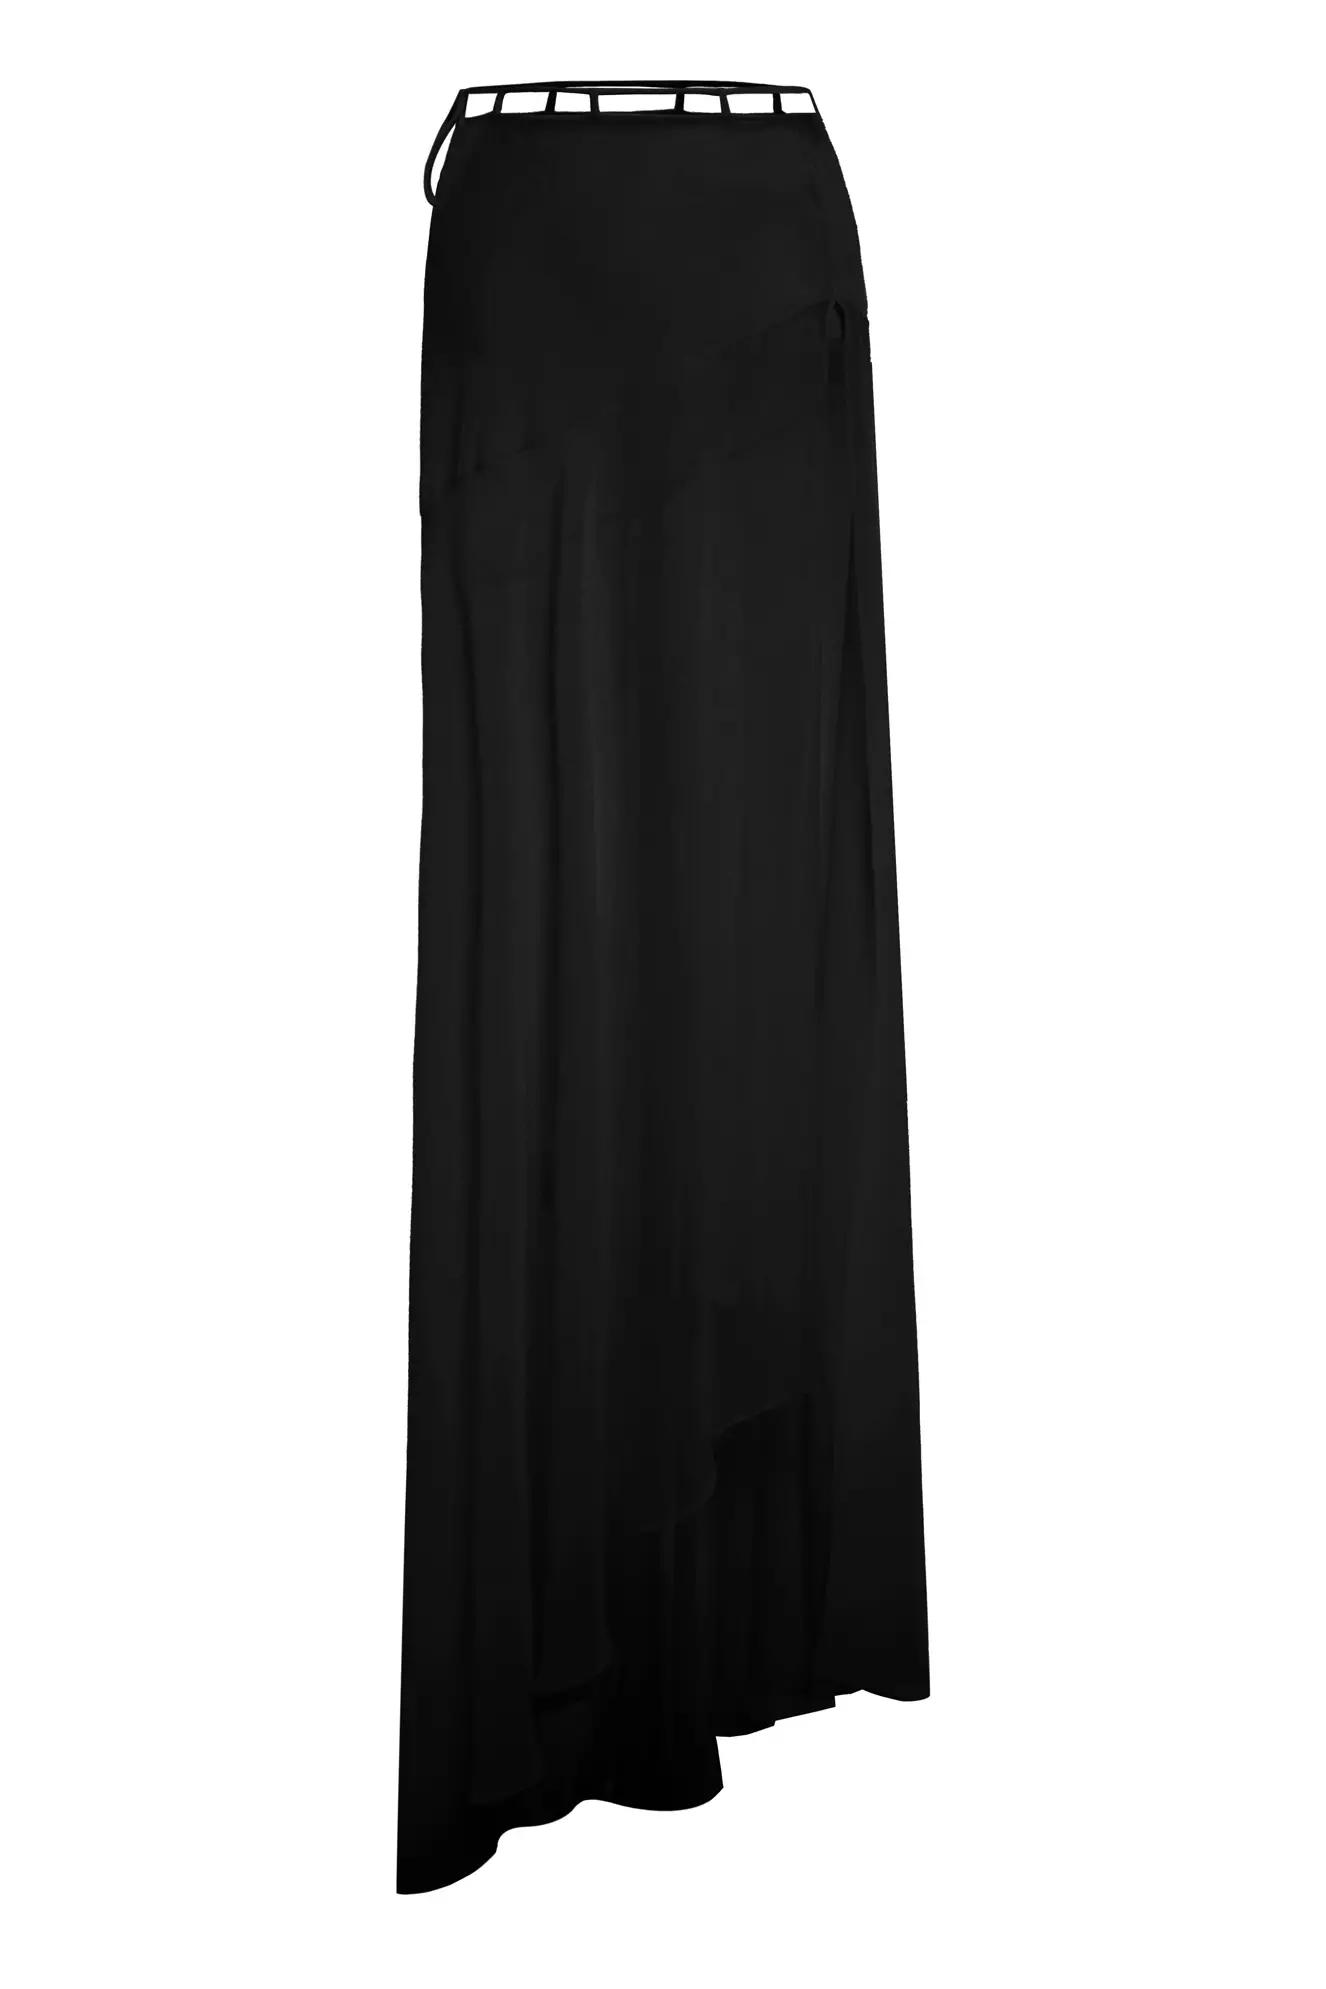 Black sifon long skirt